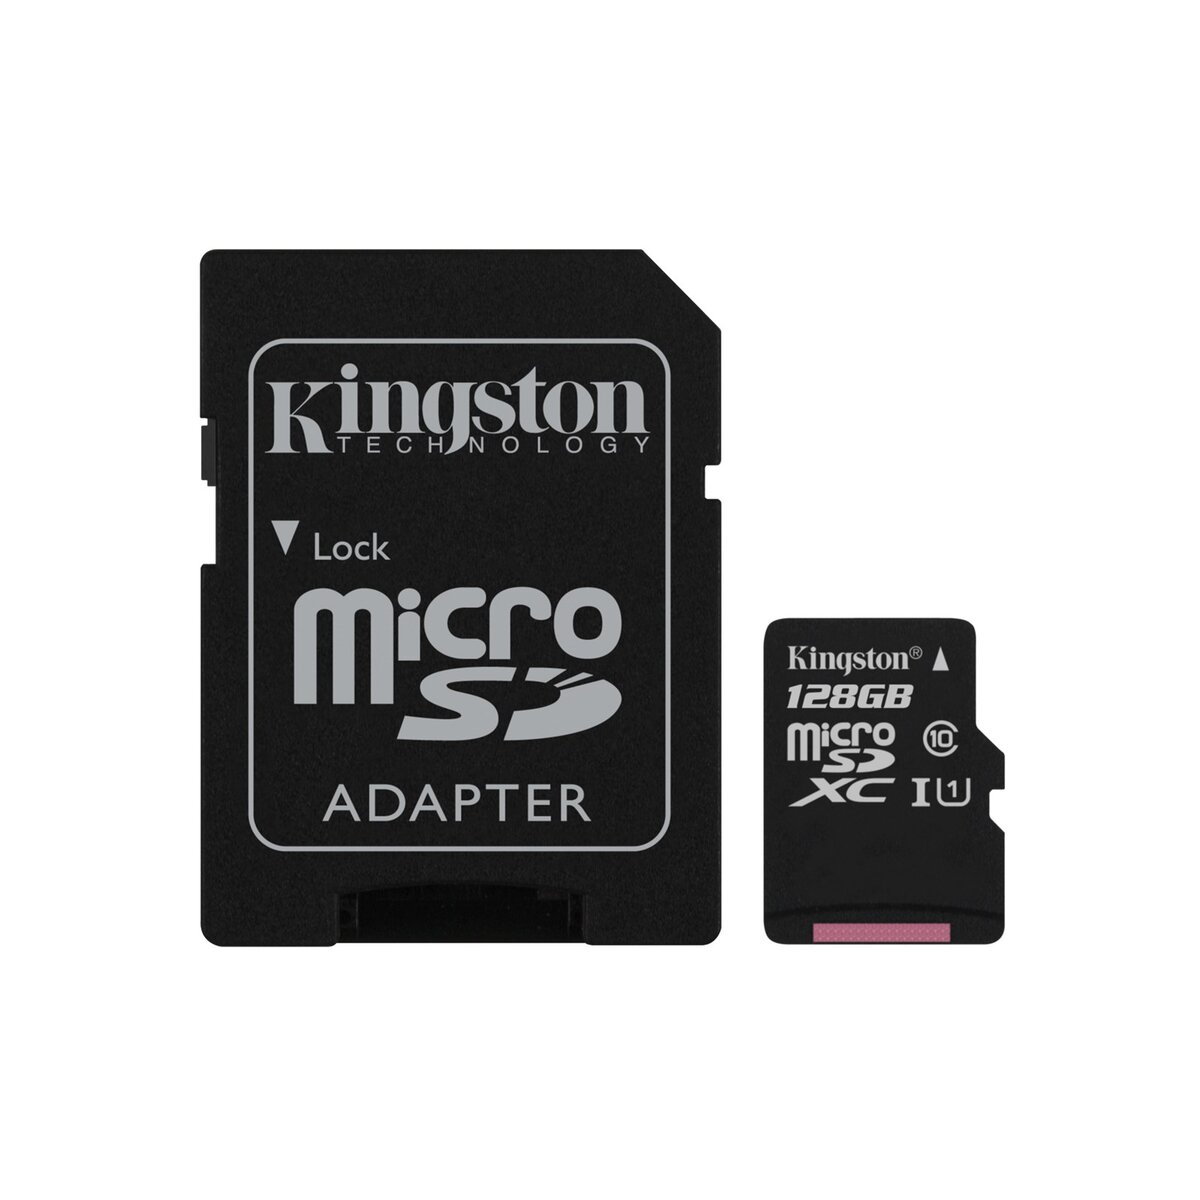 Carte Memoire Micro Sd 128 Go Class 10+Adaptateur+Lecteur Carte Memoire  XSTONE - Carte mémoire SD - Achat & prix